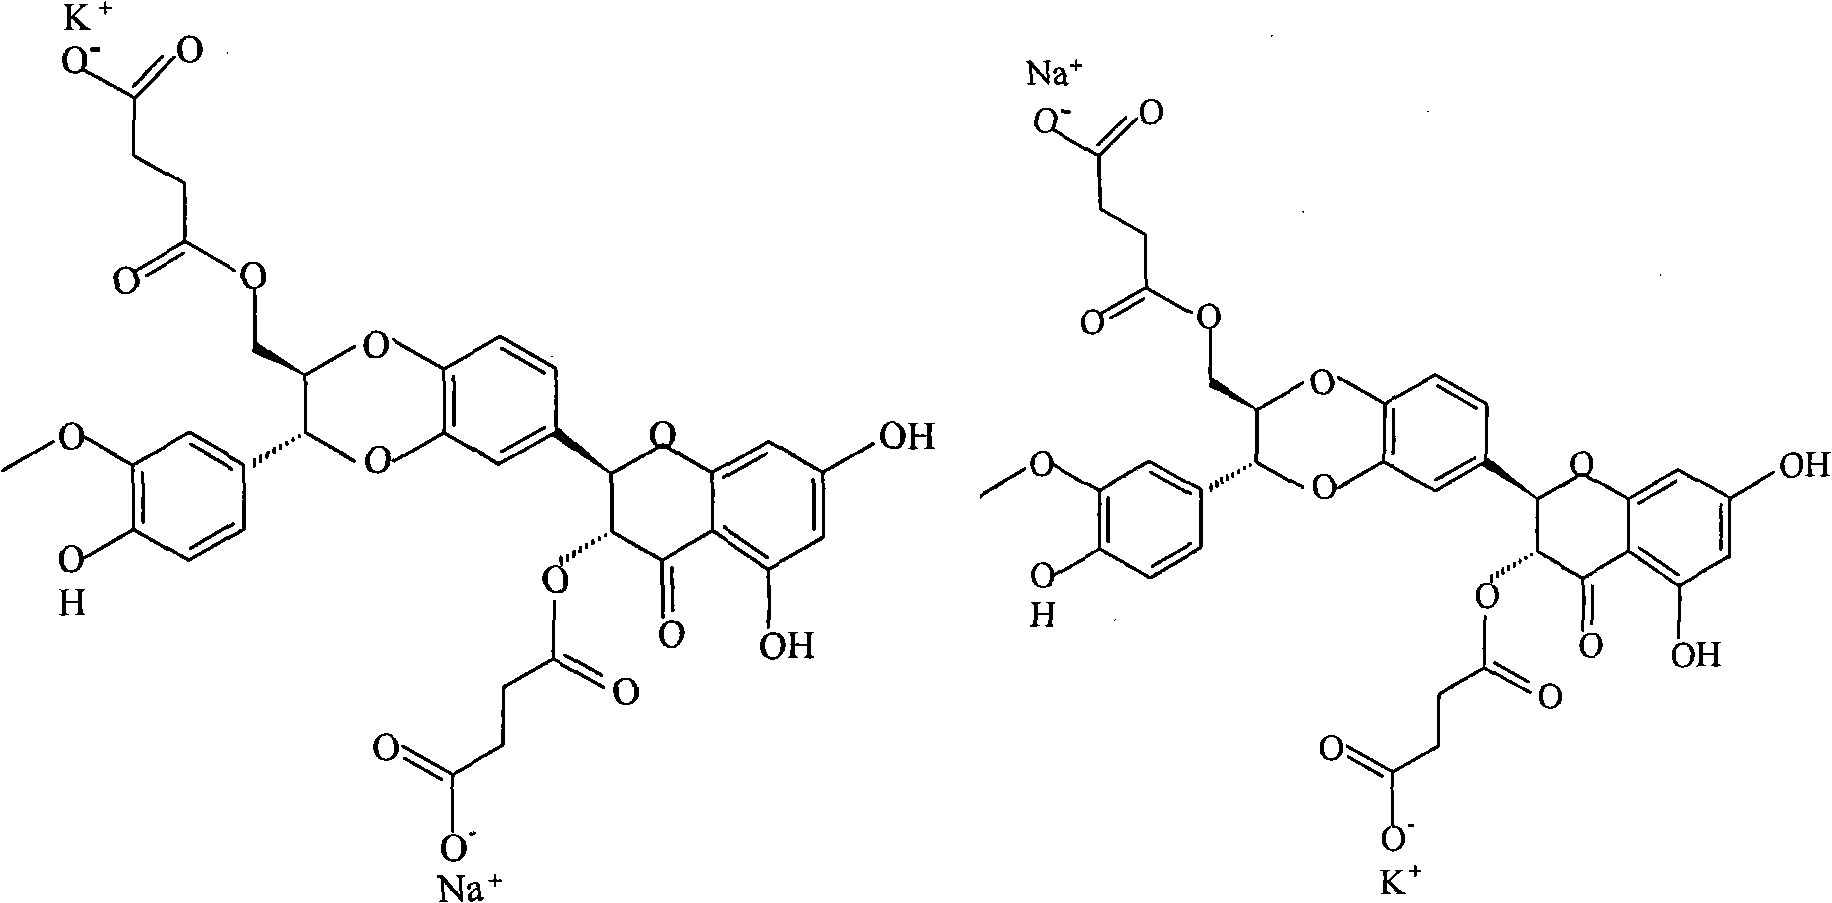 Phospholipid complex of silybin dihemisuccinate disodium and preparation method and application thereof